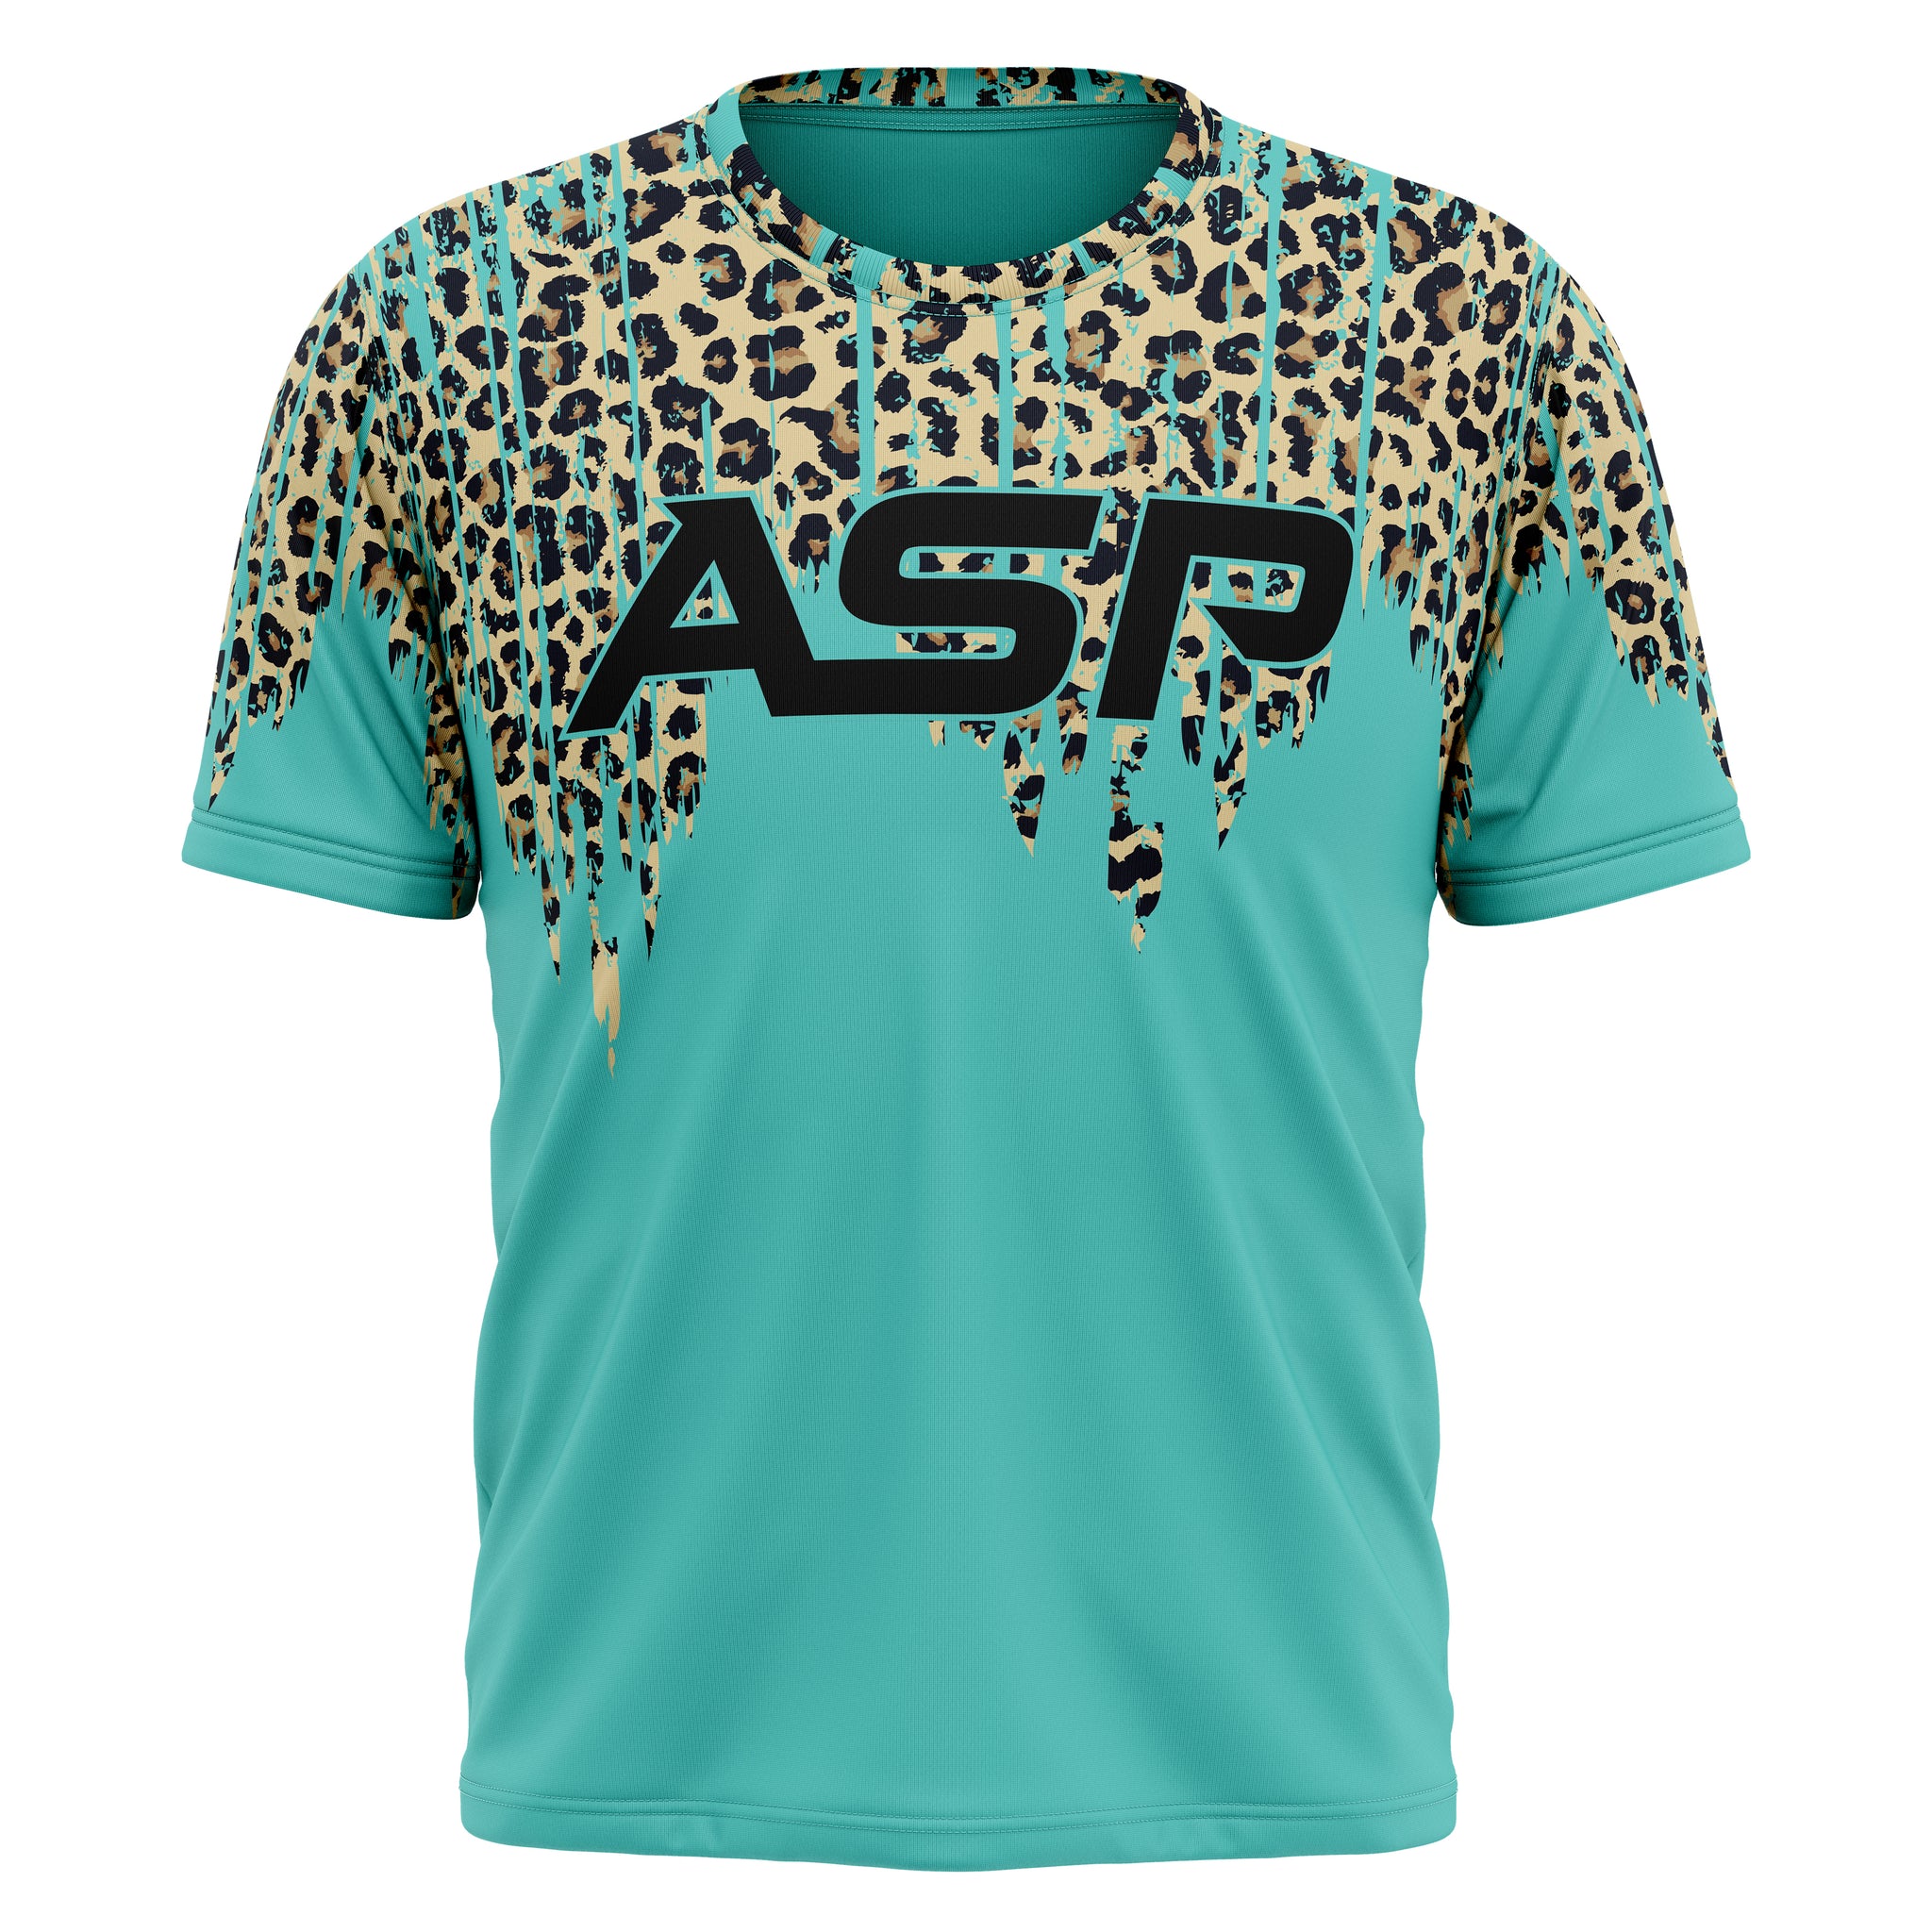 ASP Cheetah Short Sleeve